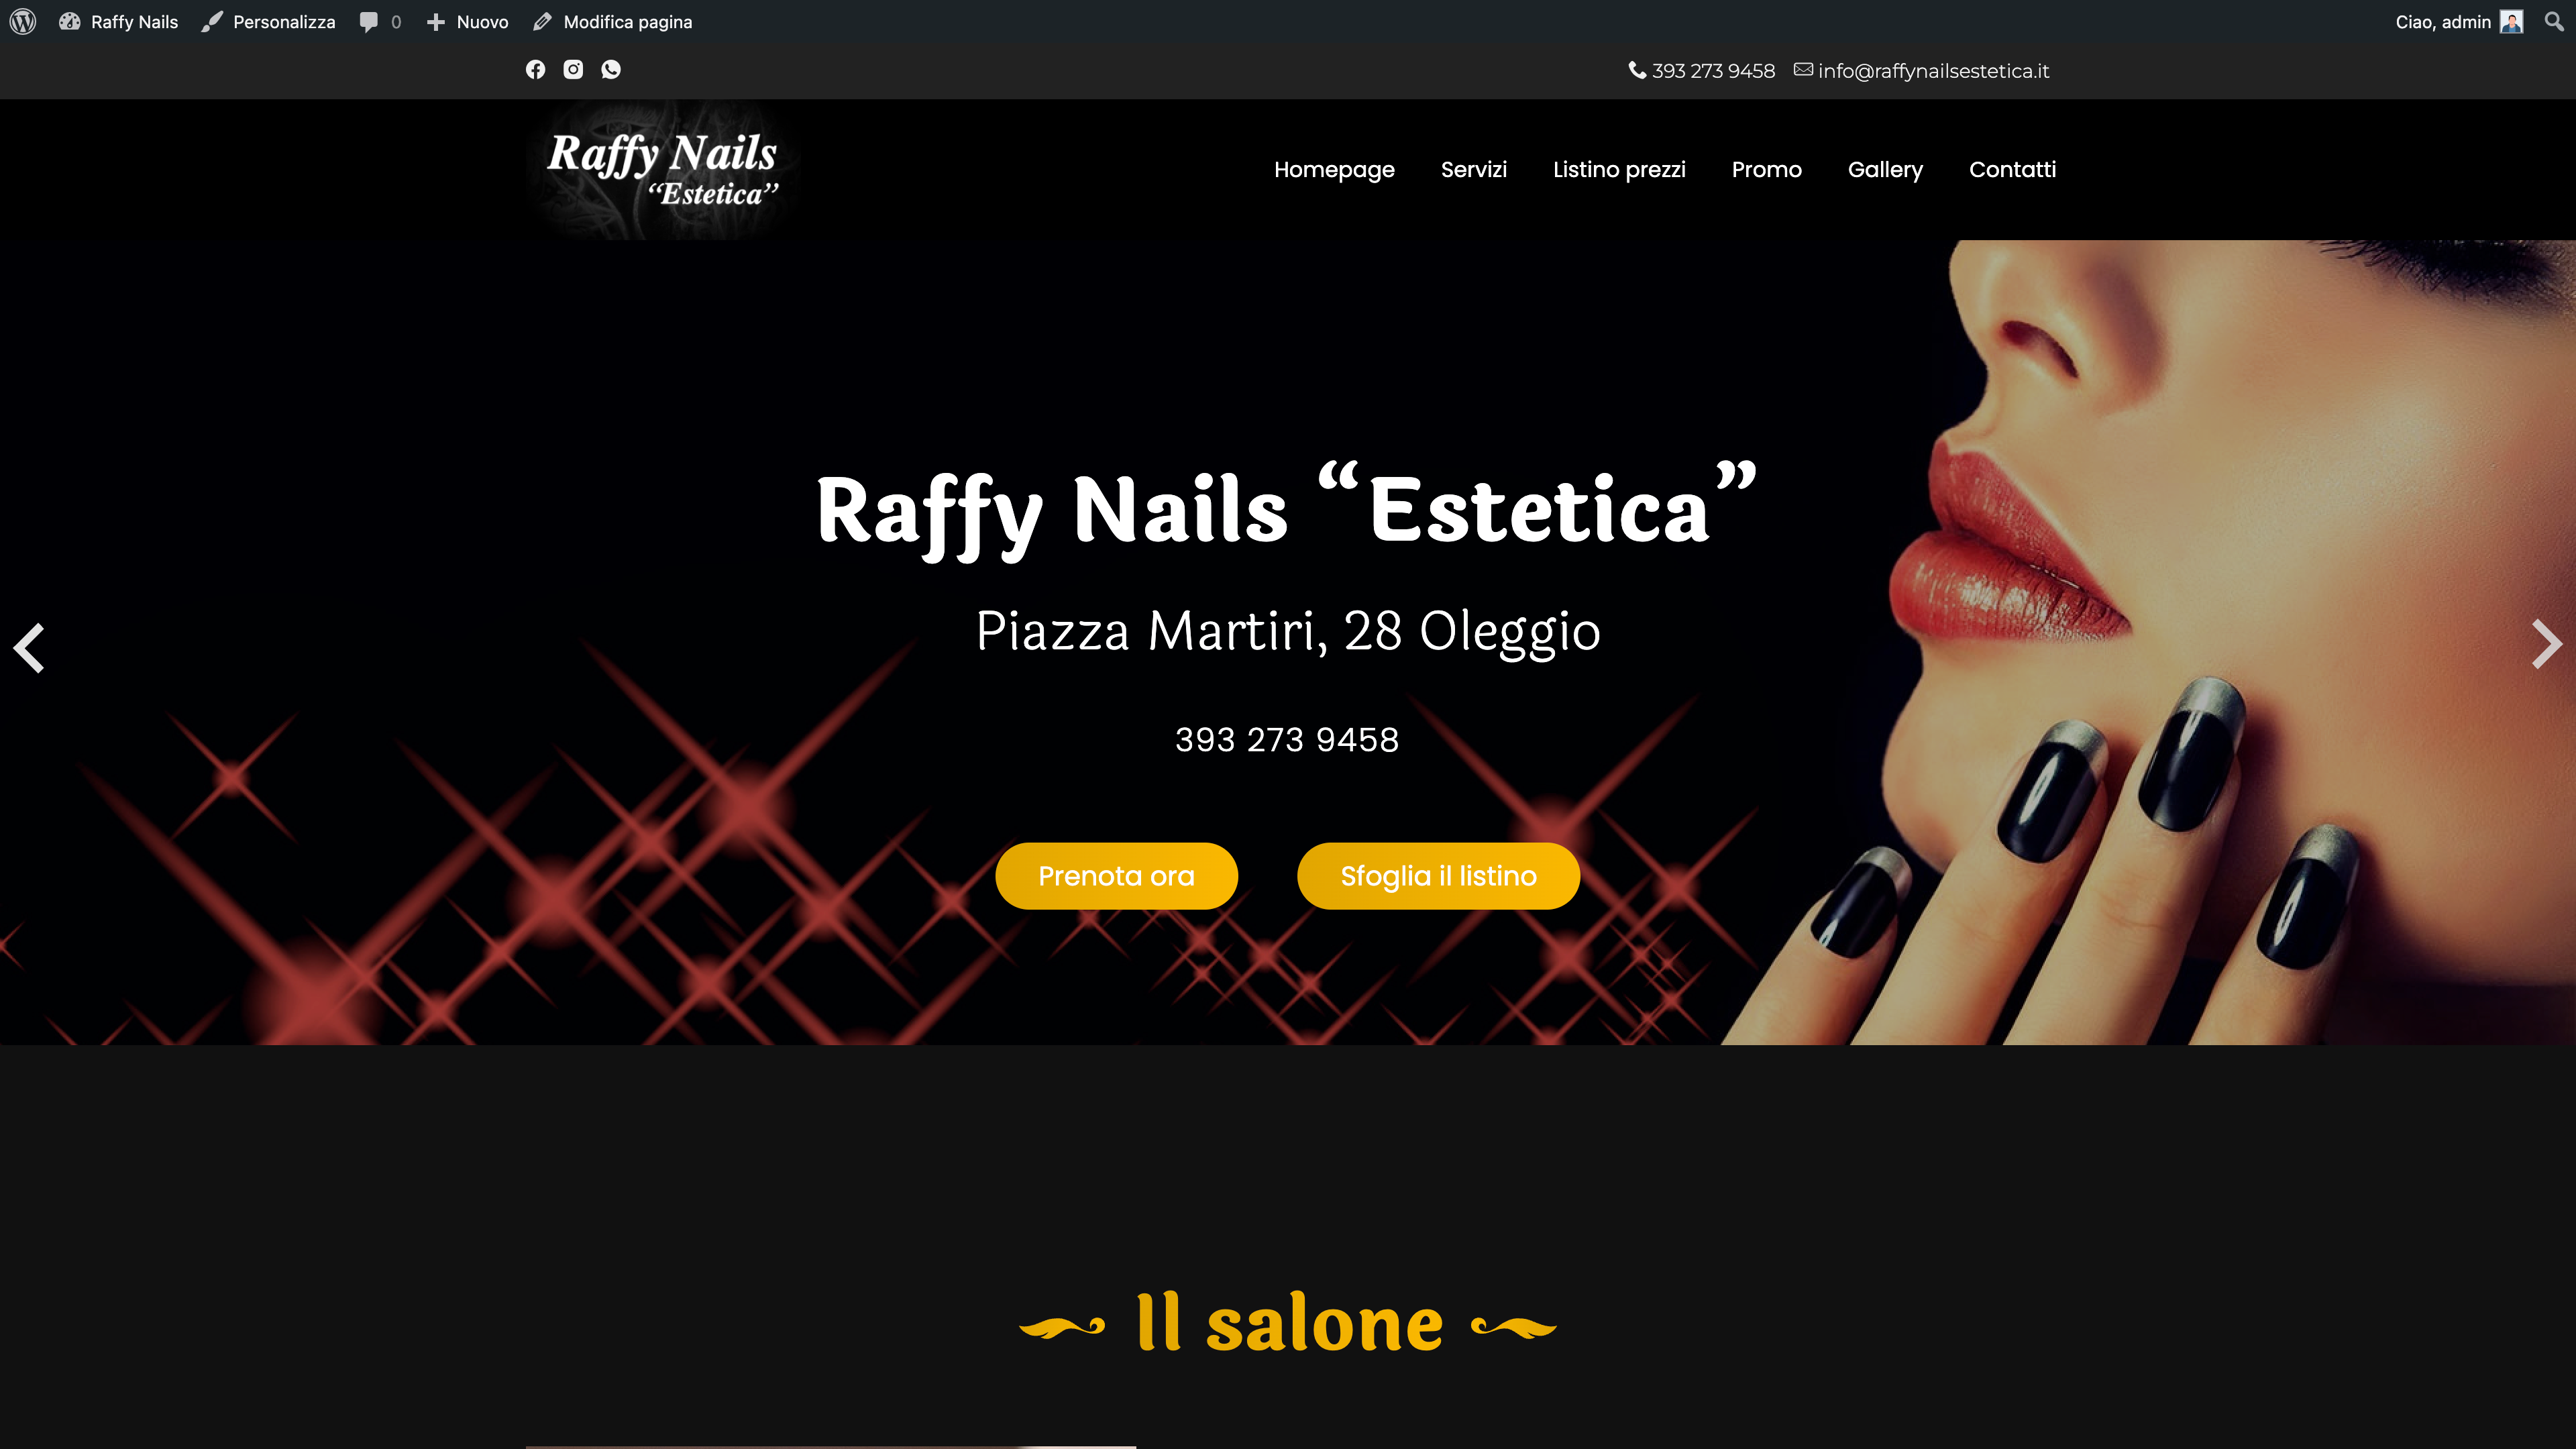 Raffy Nails Estetica